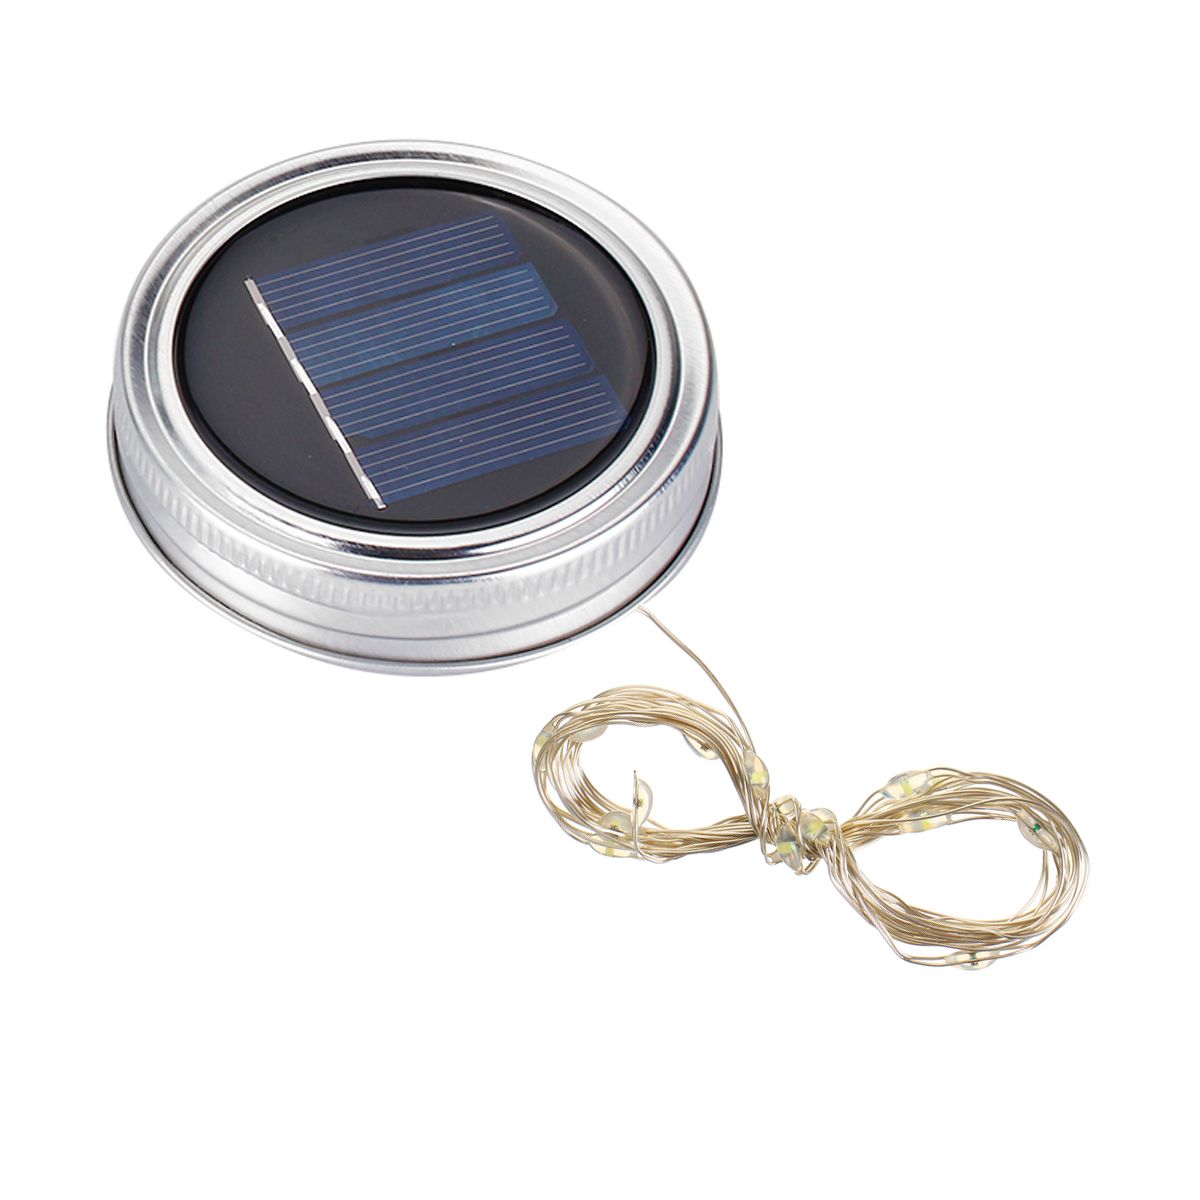 1M-2M-LED-Solar-Powered-String-Light-Mason-Jar-Lid-Cover-Outdoor-Fairy-Lamp-1745475